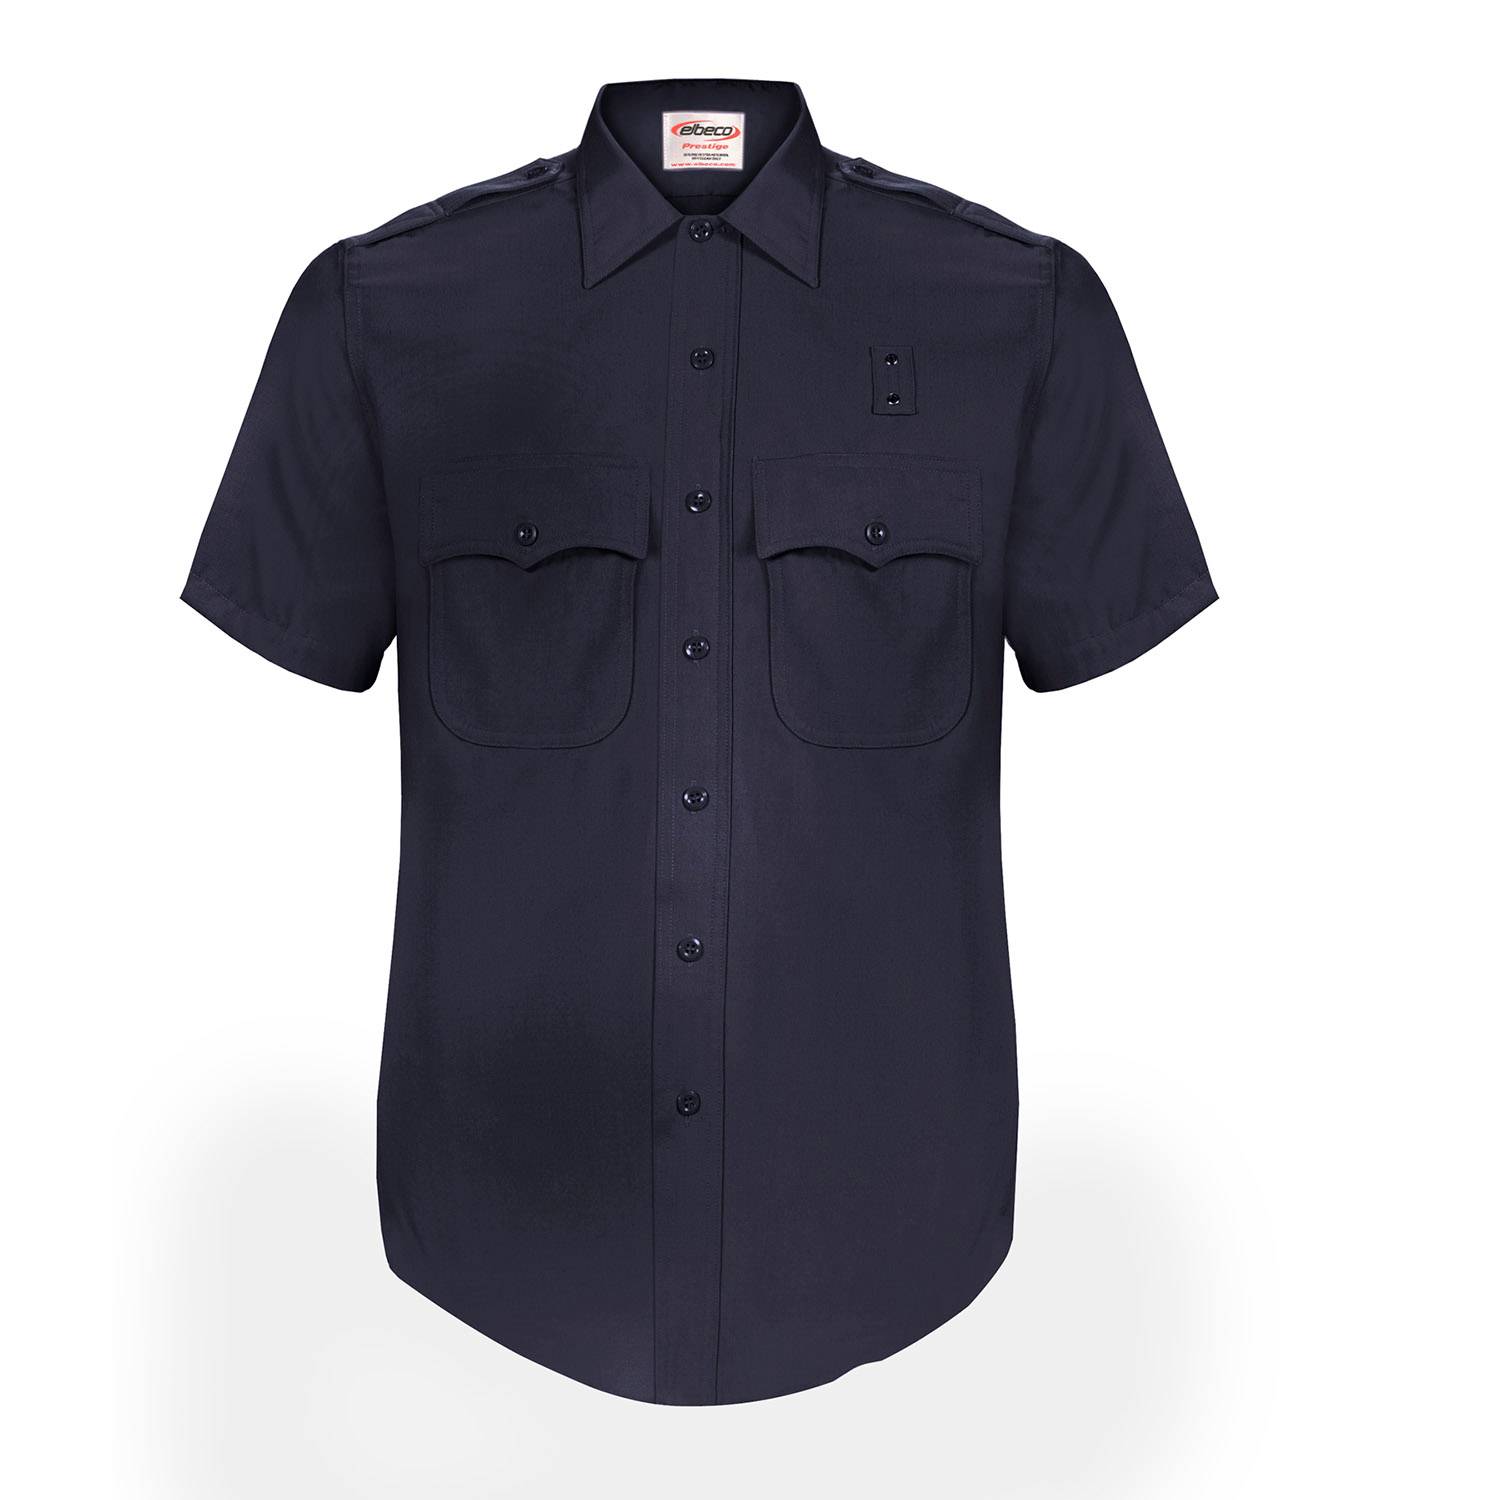 Elbeco Distinction West Coast Short Sleeve Shirt